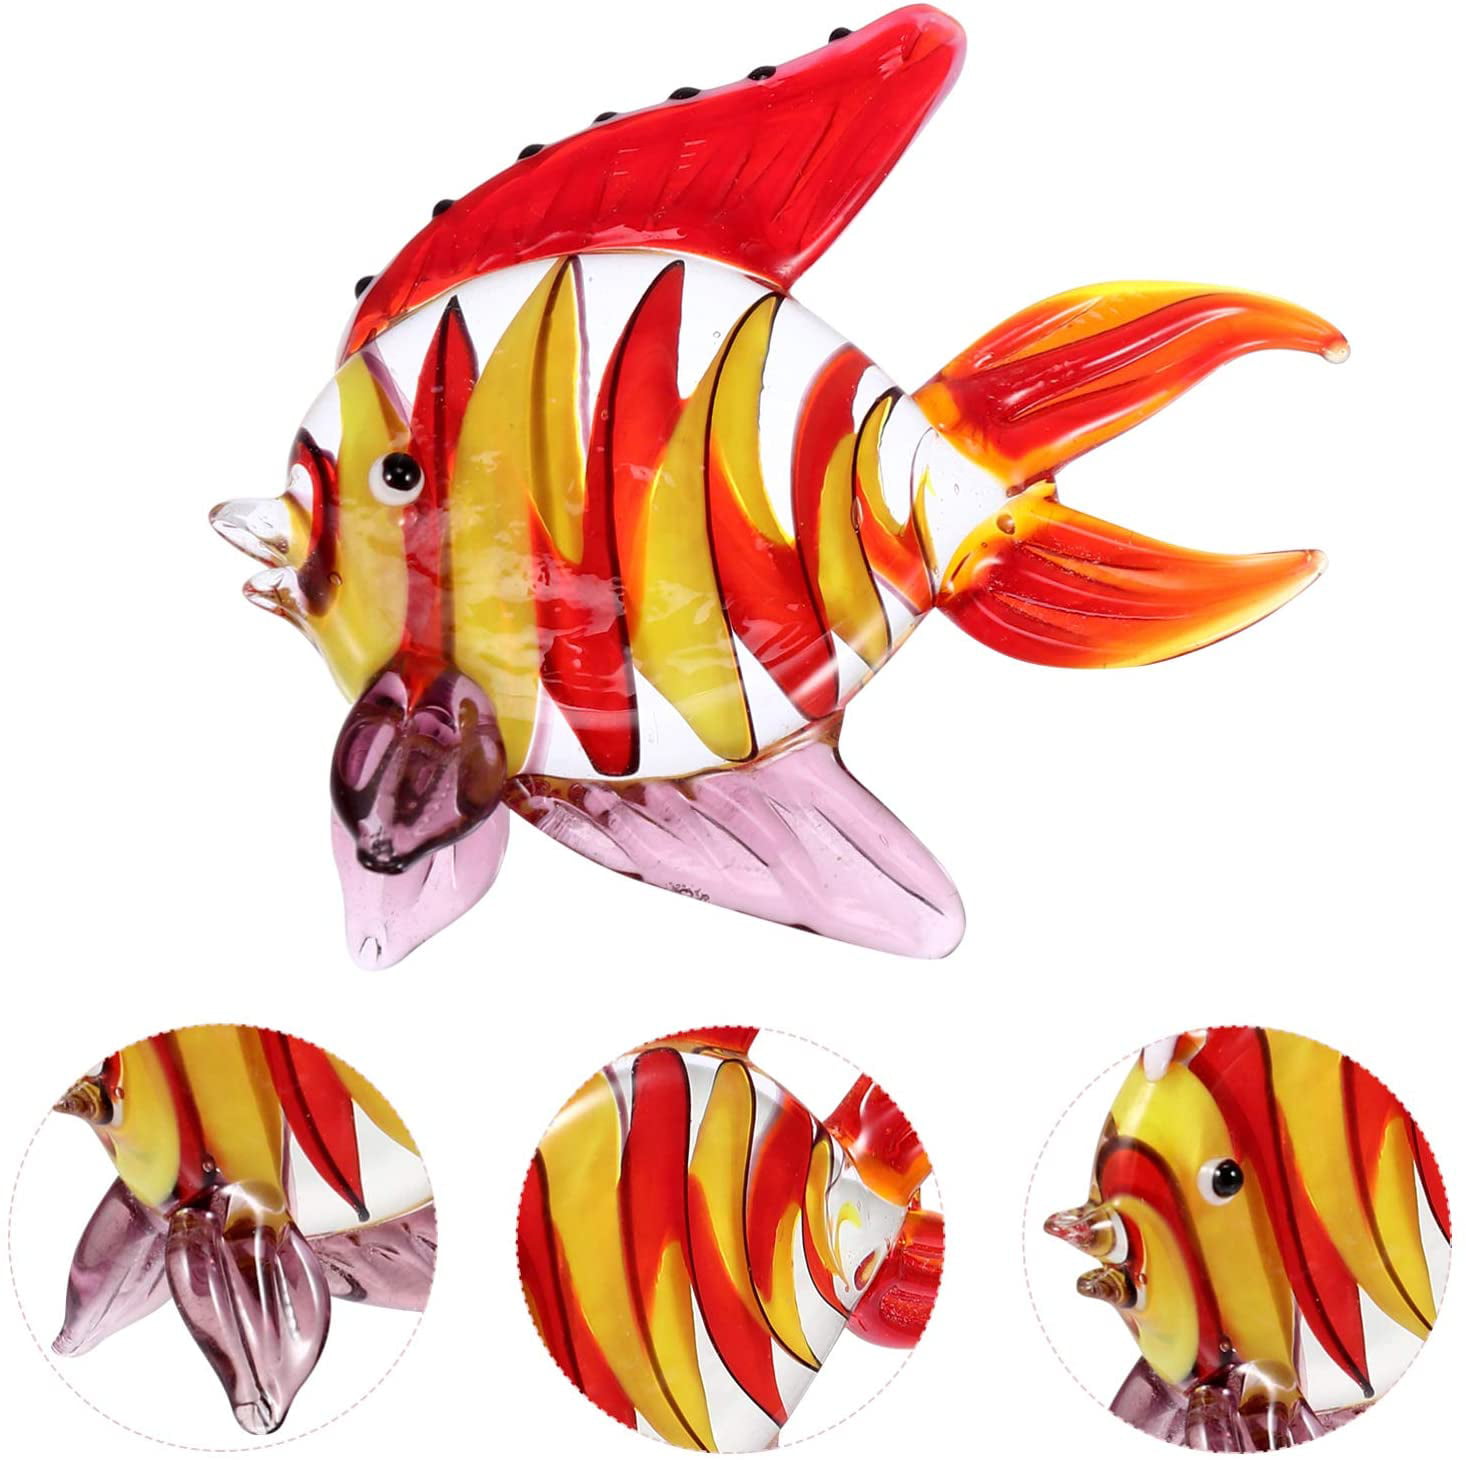 Coastal Style MINIATURE HAND BLOWN Art Glass Fish sea animal FIGURINE Collection 